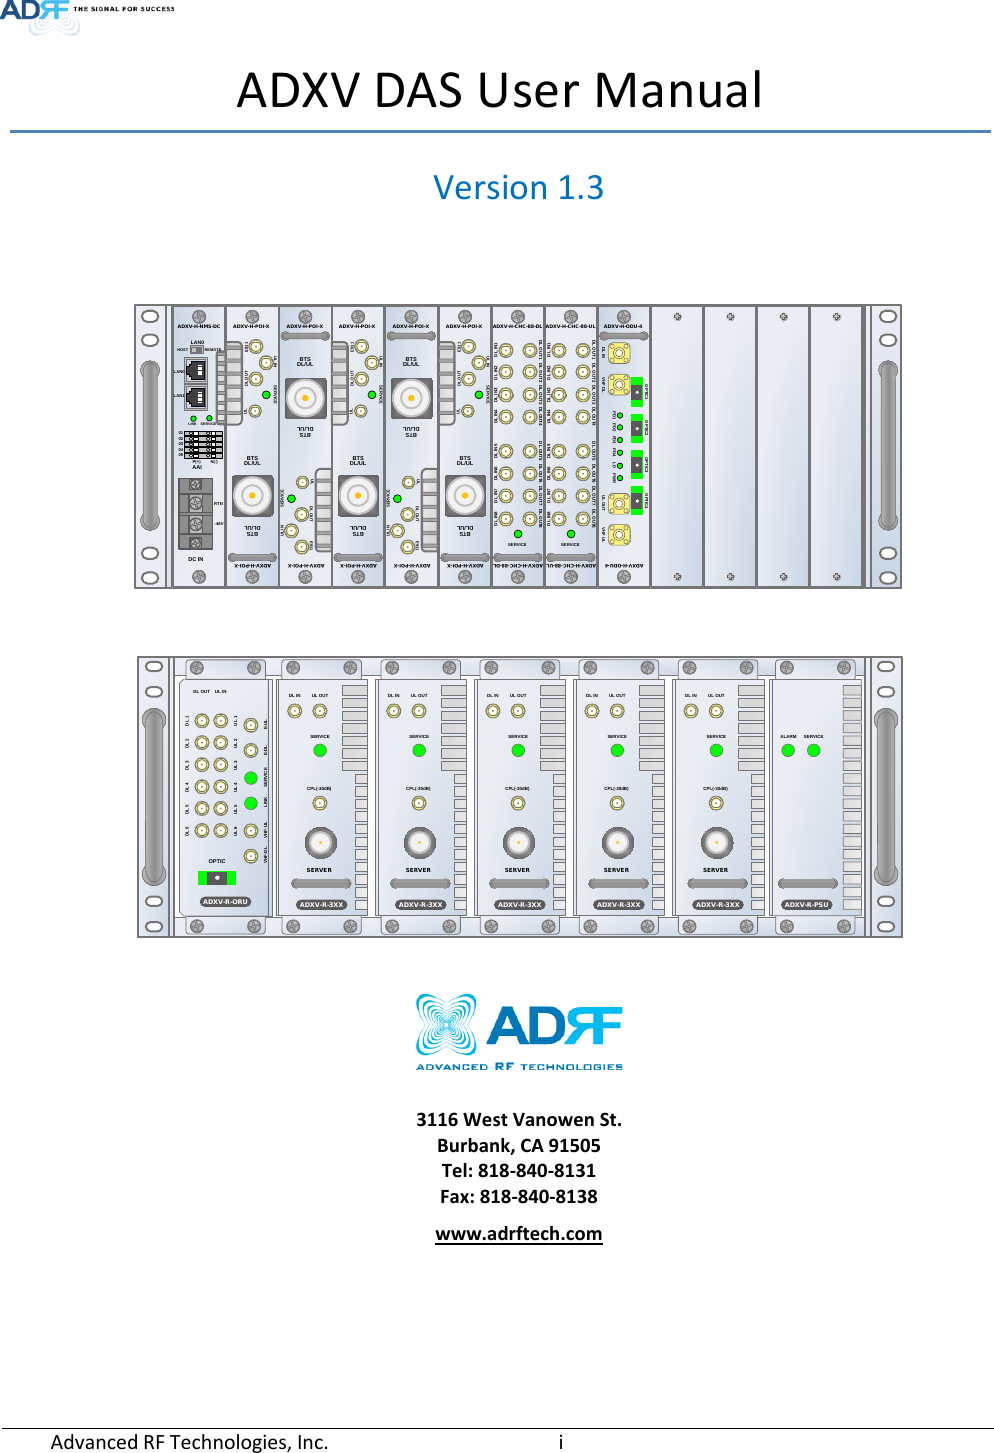 Page 1 of ADRF KOREA ADXV-R-336 DAS (Distributed Antenna System) User Manual ADXV DAS